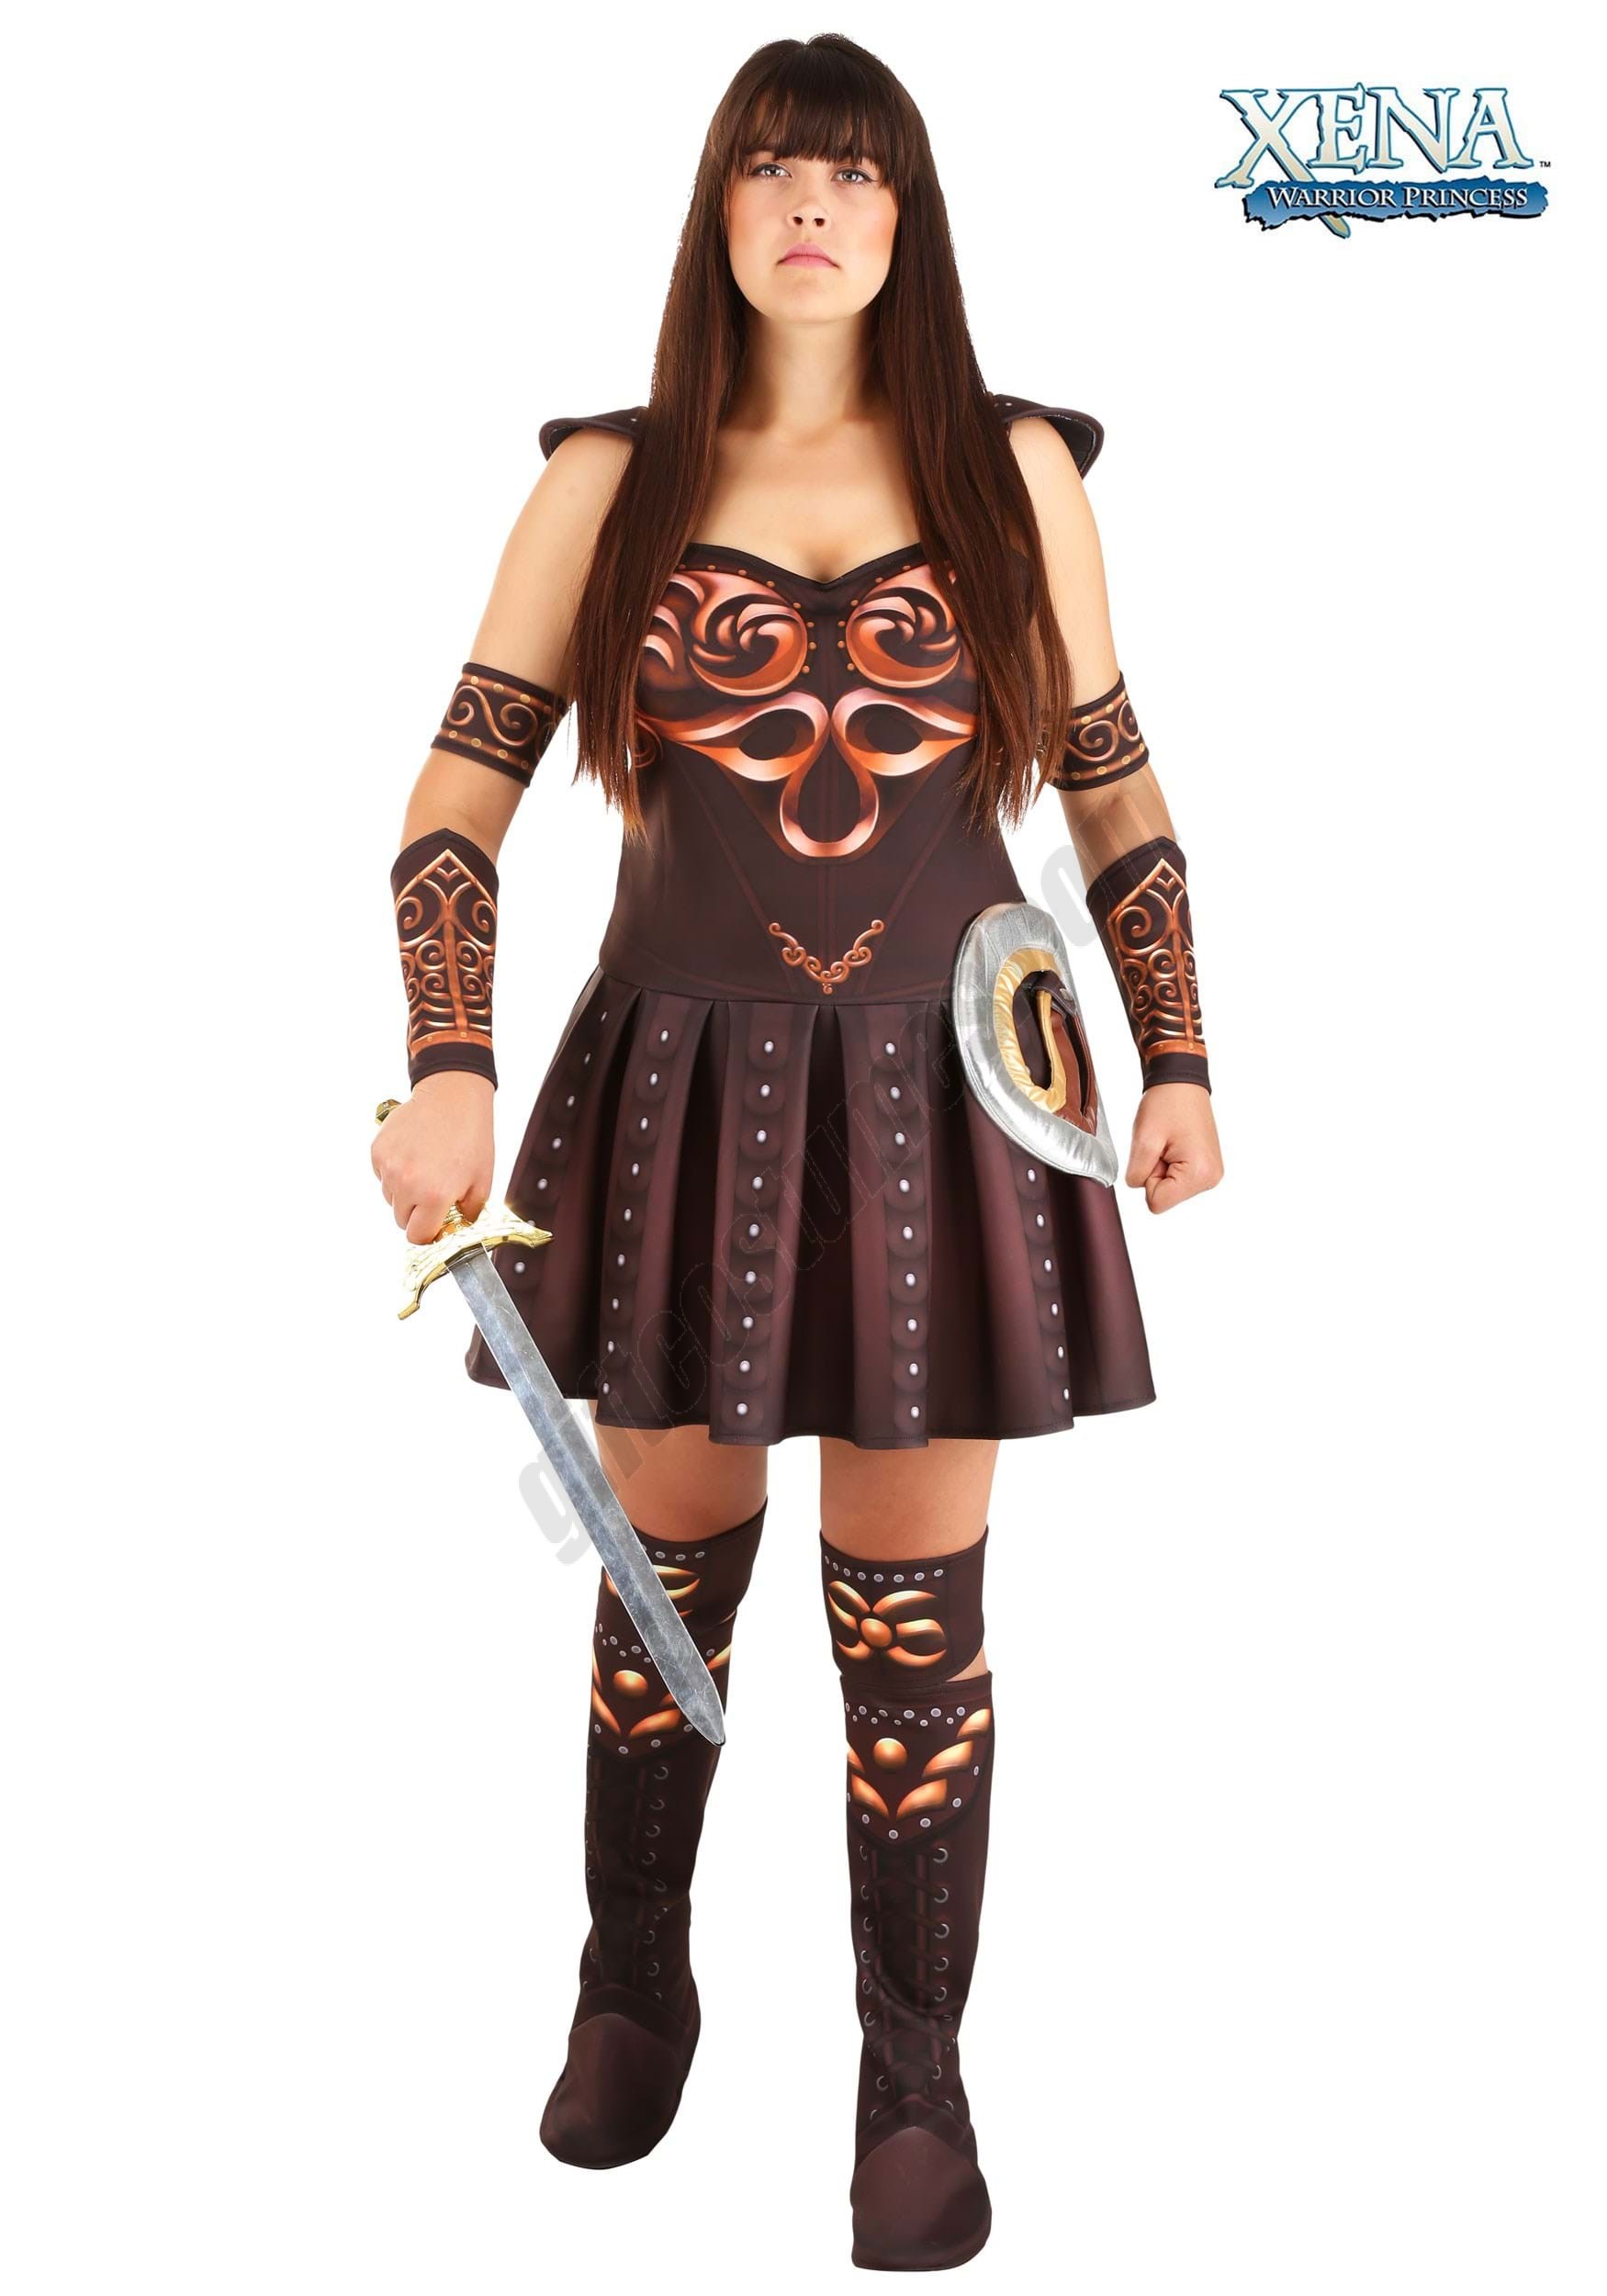 Plus Size Xena Warrior Princess Costume - Women's - Plus Size Xena Warrior Princess Costume - Women's